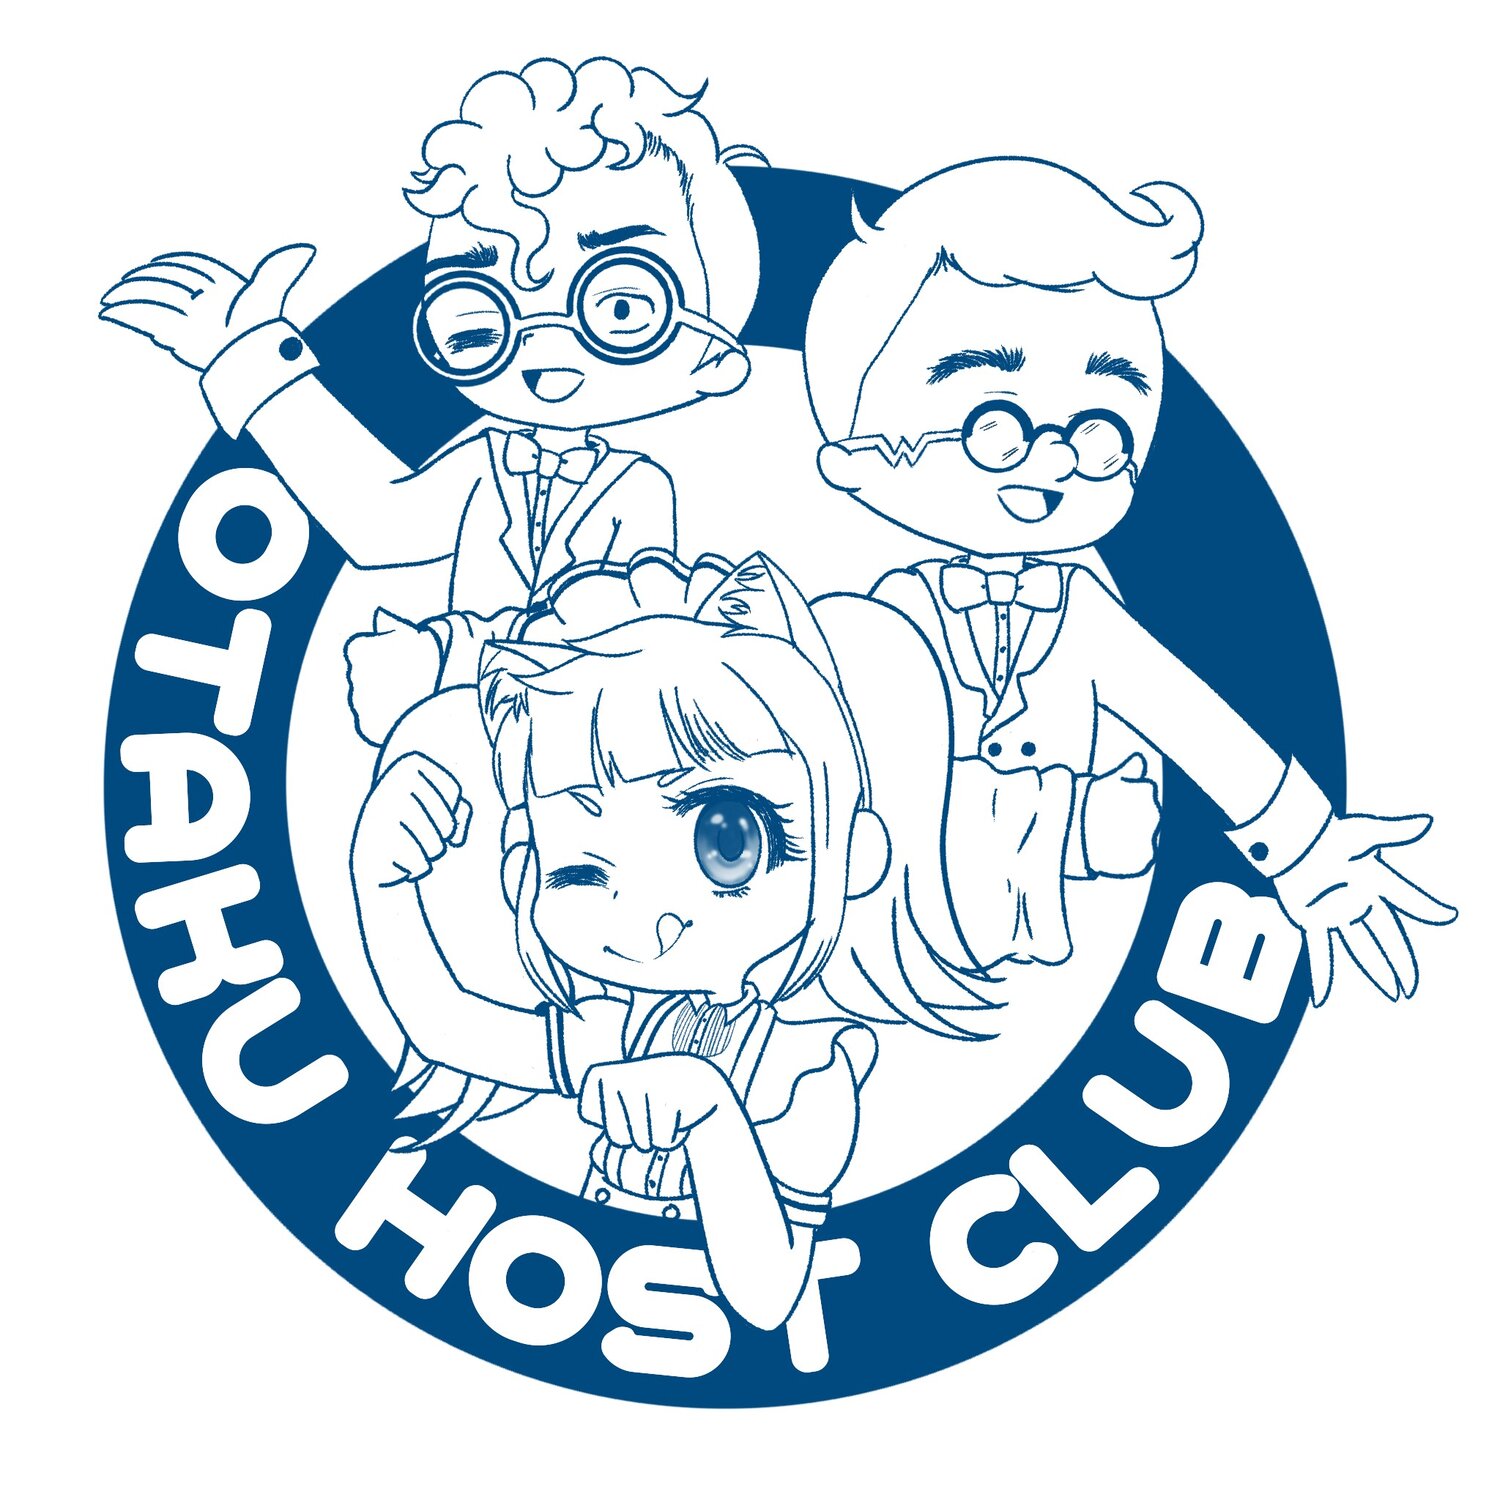 Otaku Host Club